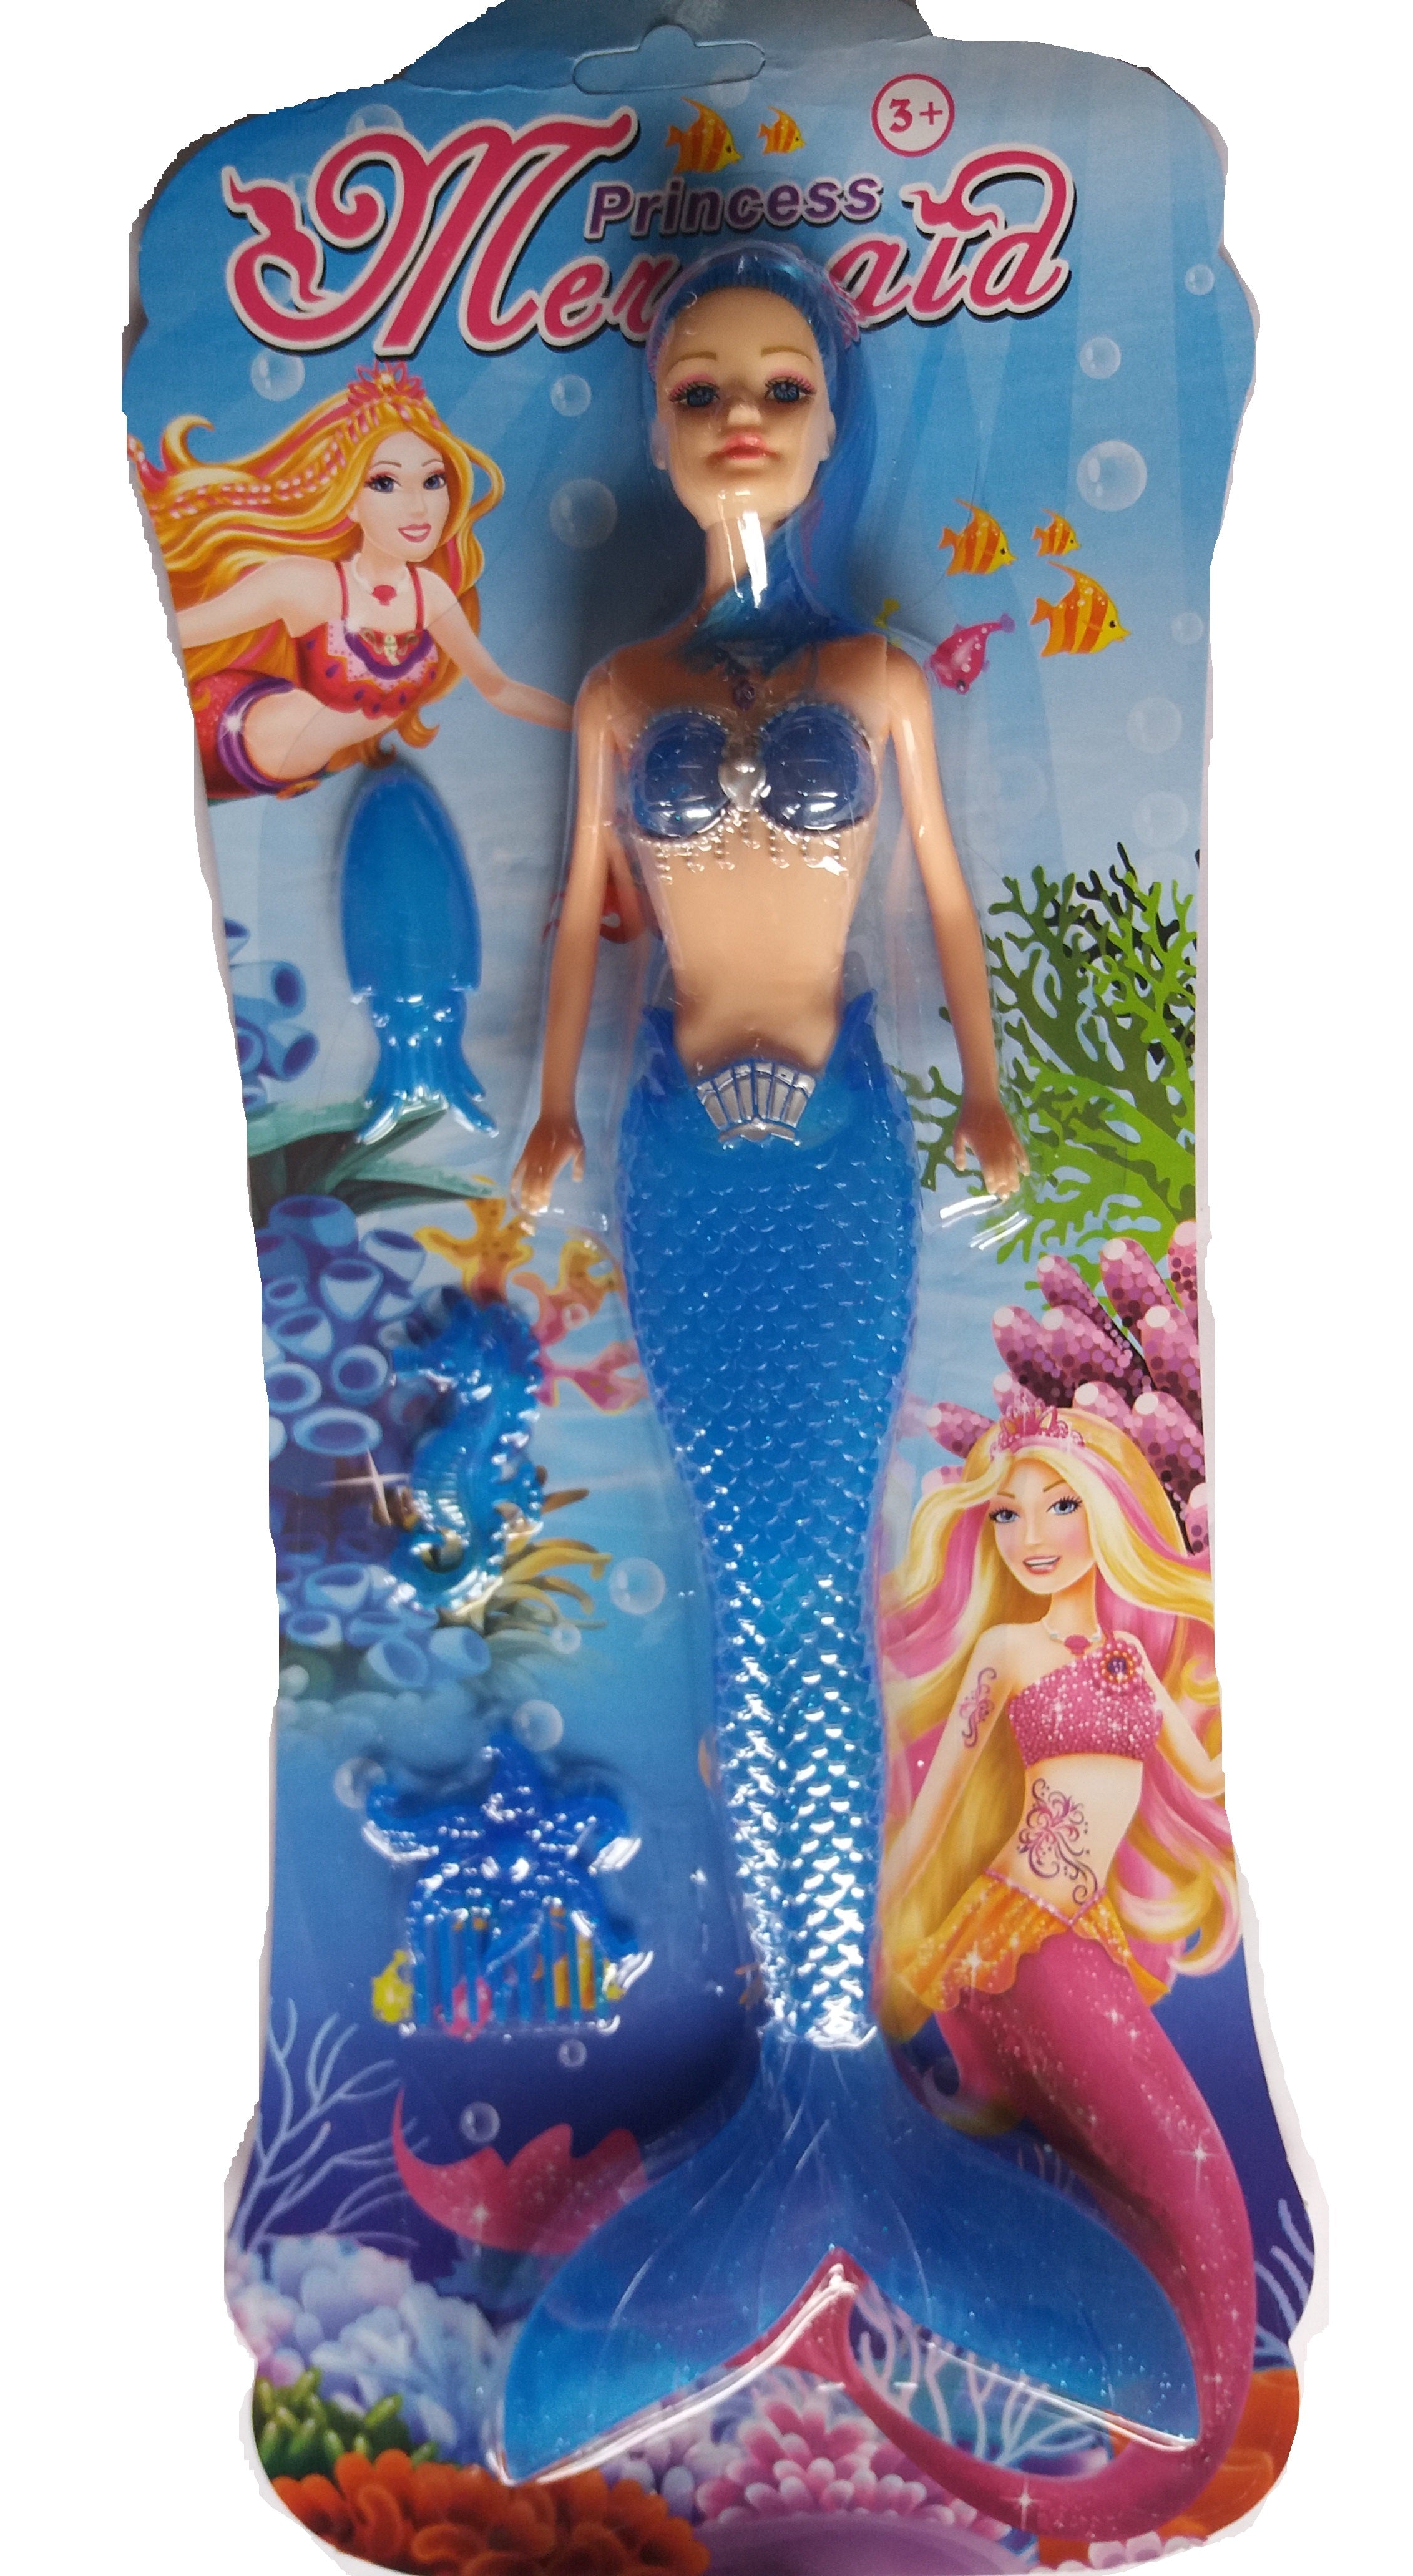 Mermaid Princess Playset